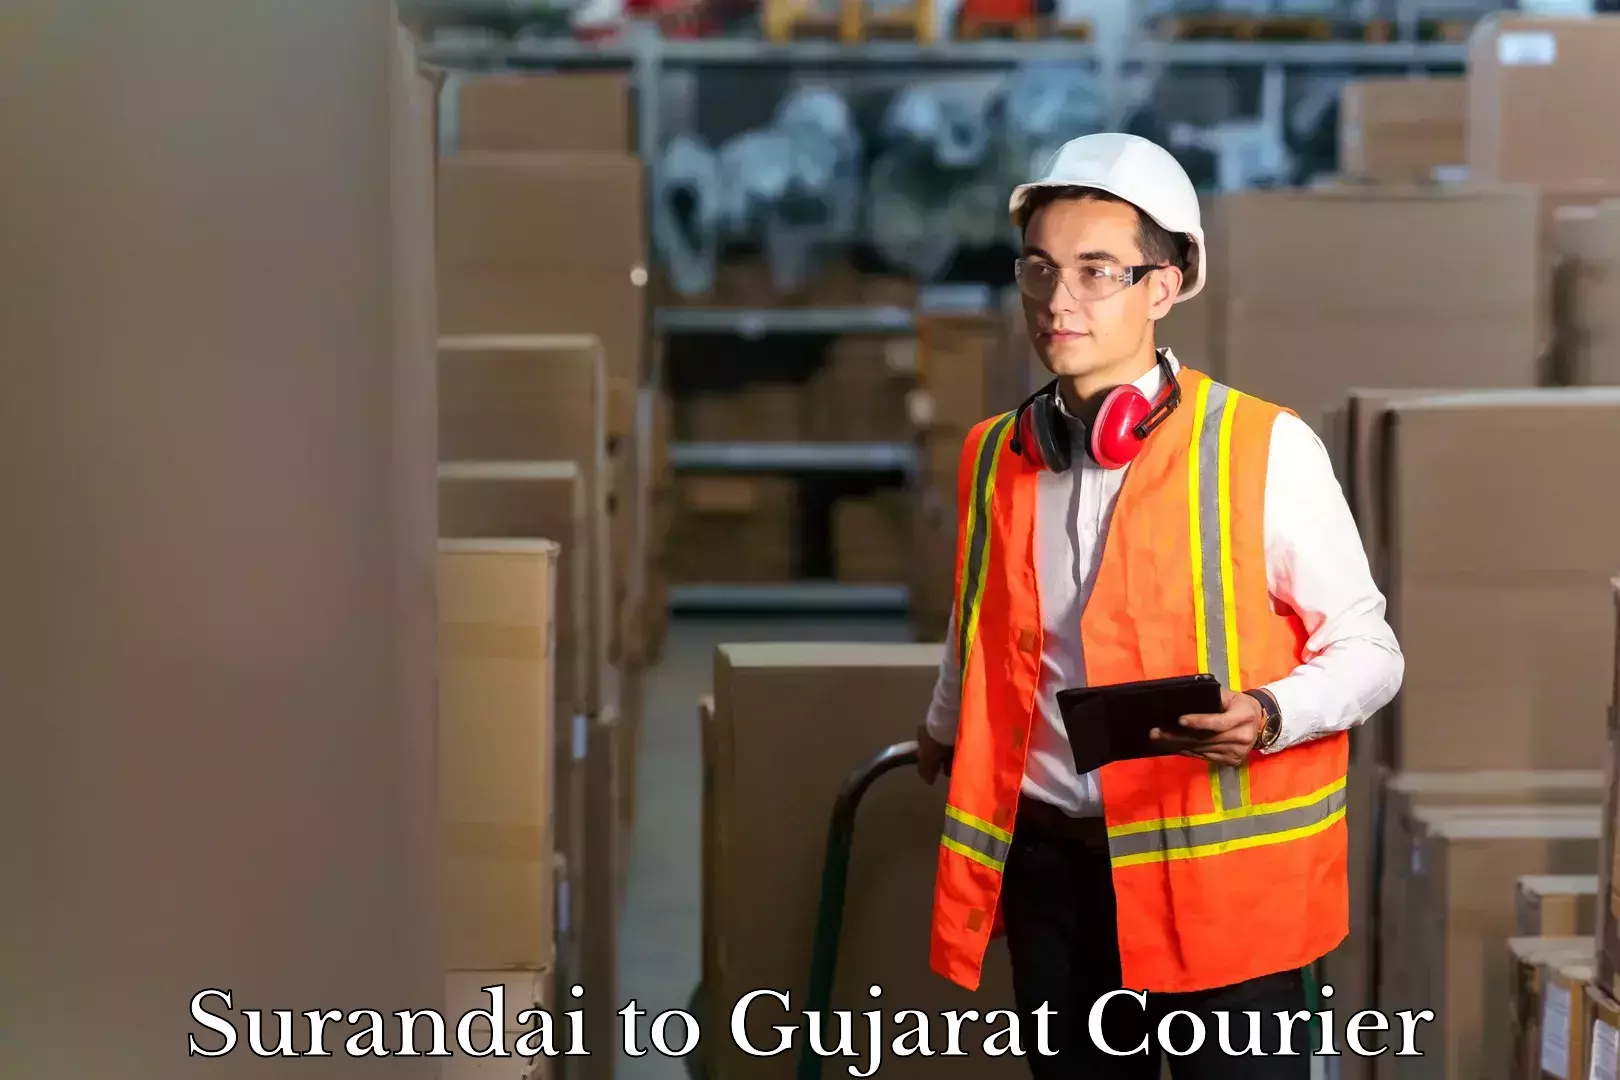 Luggage transport company Surandai to Gujarat